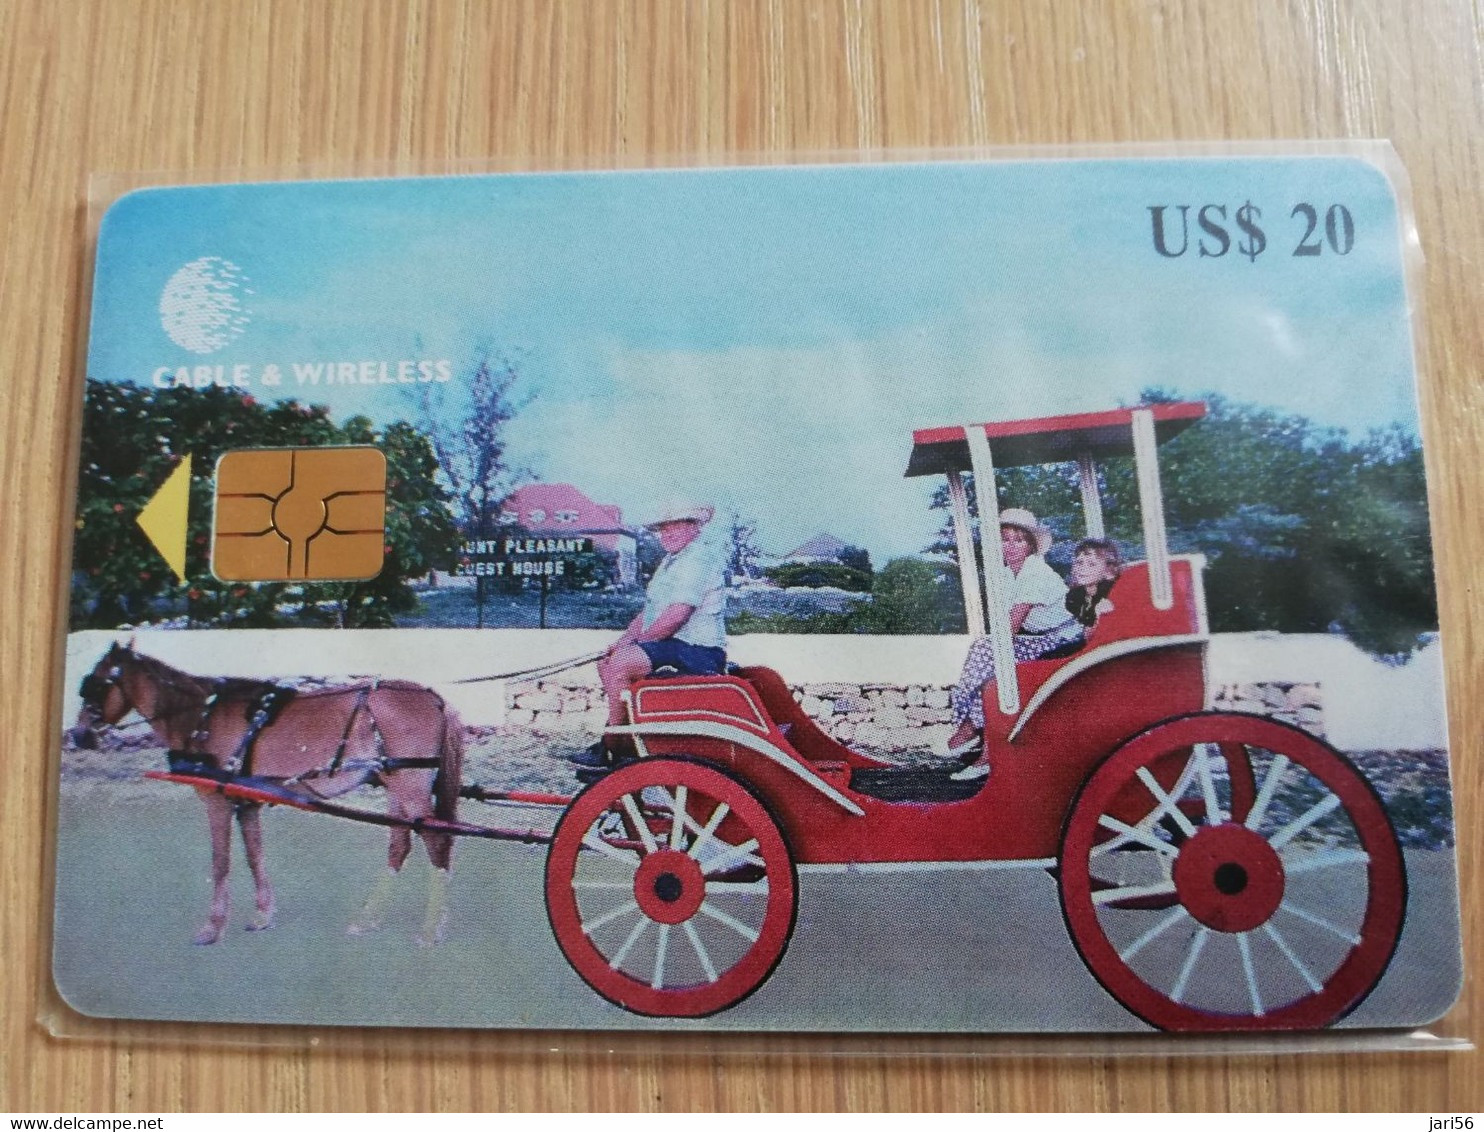 TURKS & CAICOS ISLANDS $ 20,00  CHIP  CARD  HORSE CART WITH LOGO     T&C -C3  GEM6     Fine Used  Card  **3317** - Turks E Caicos (Isole)